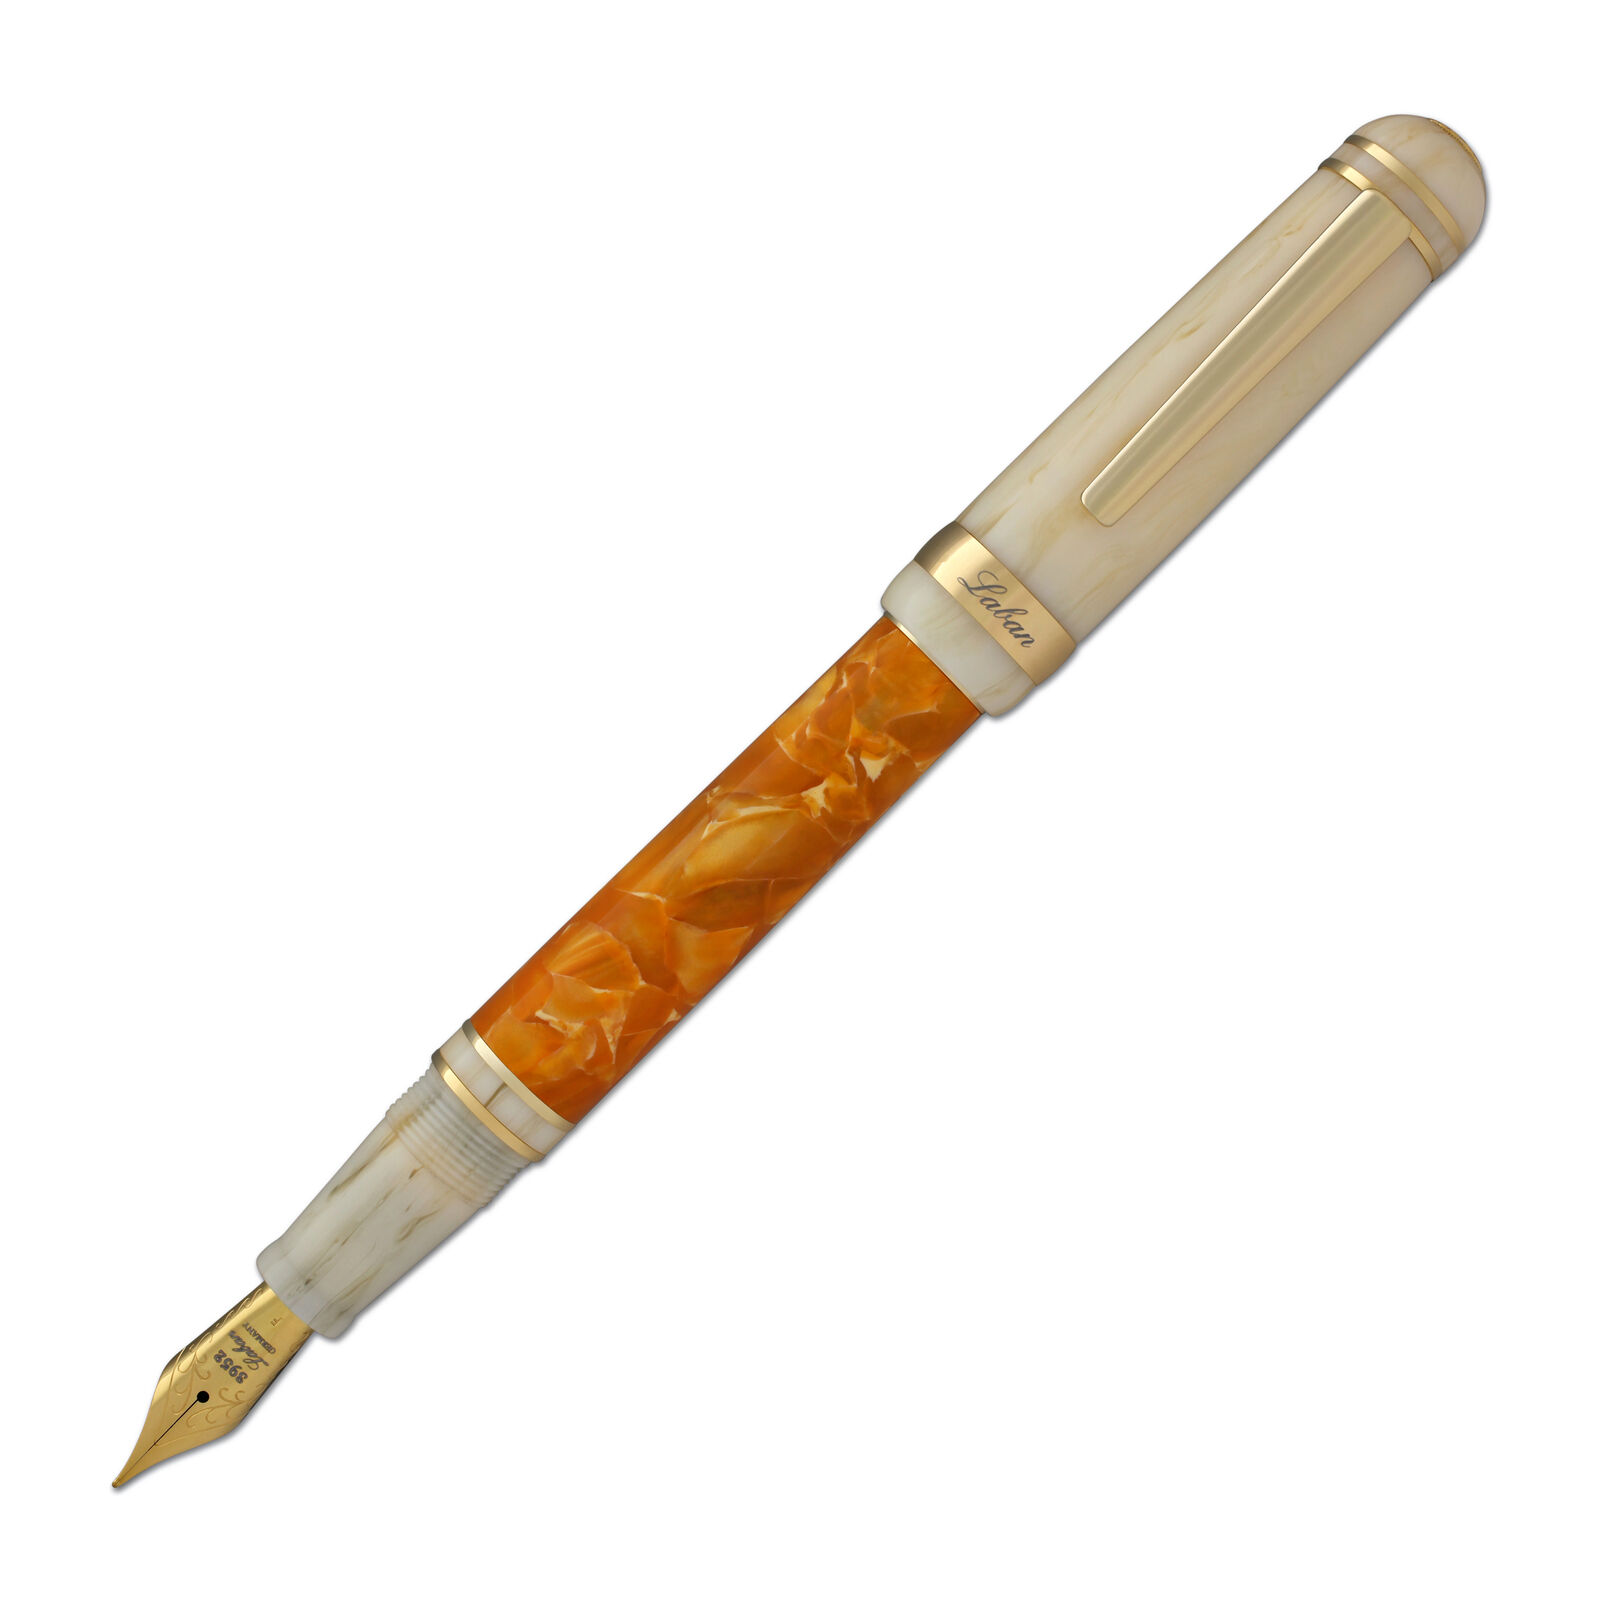 Laban 325 Fountain Pen in Sun Orange - Medium Point - NEW in box